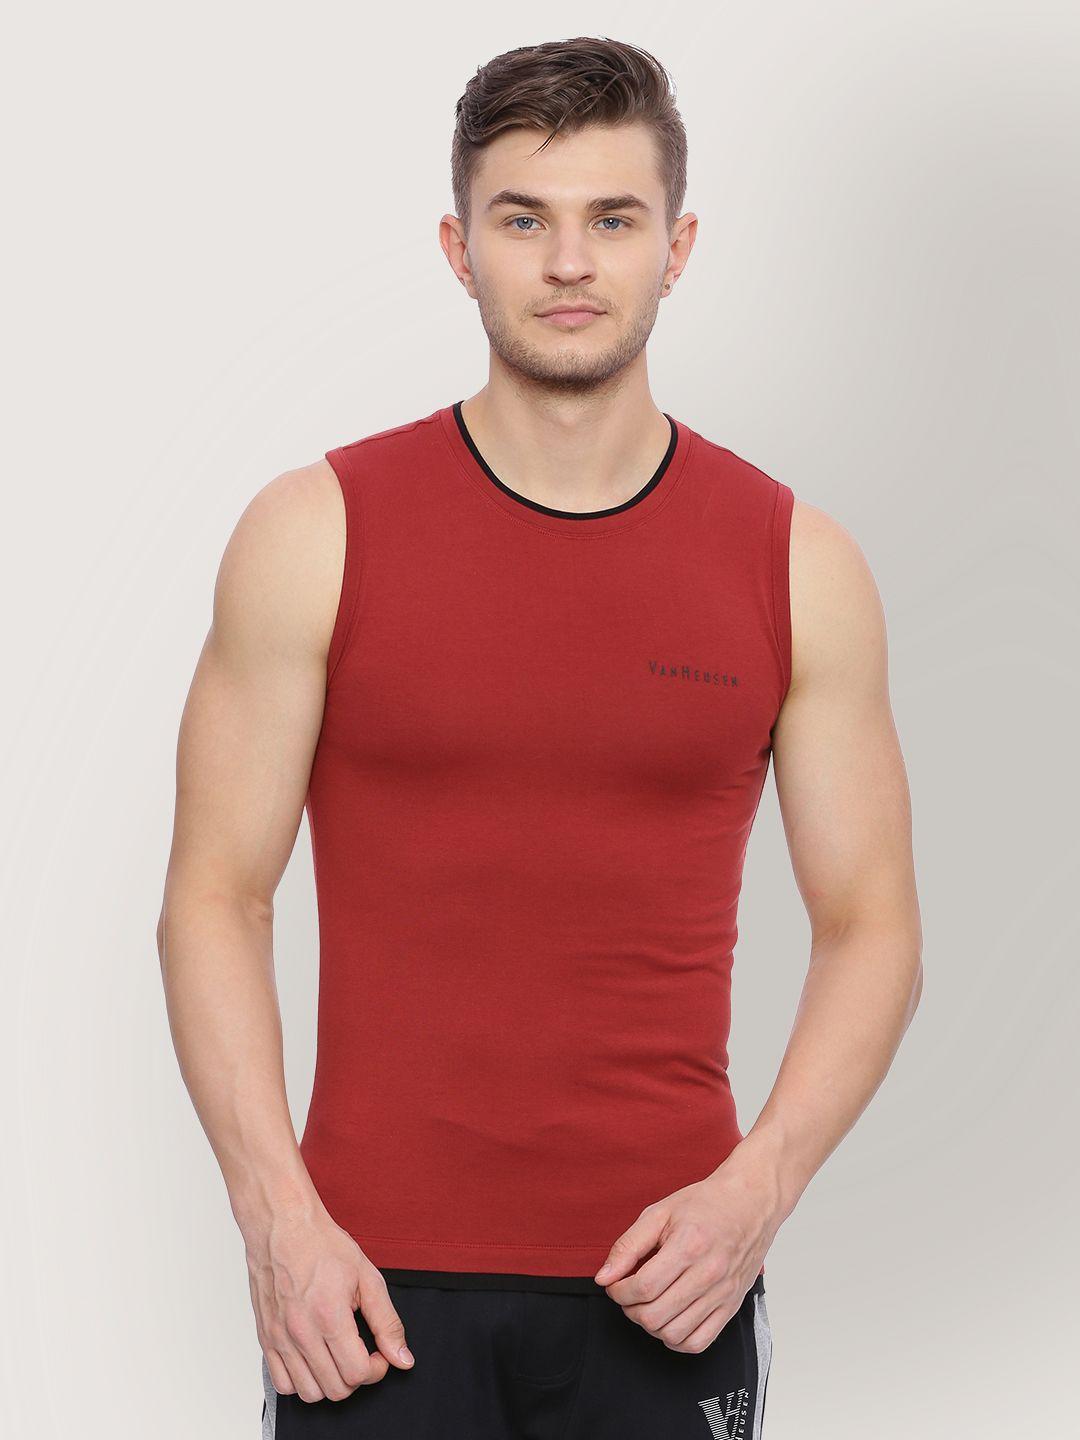 van heusen men red solid quick dry ultra soft gym vest